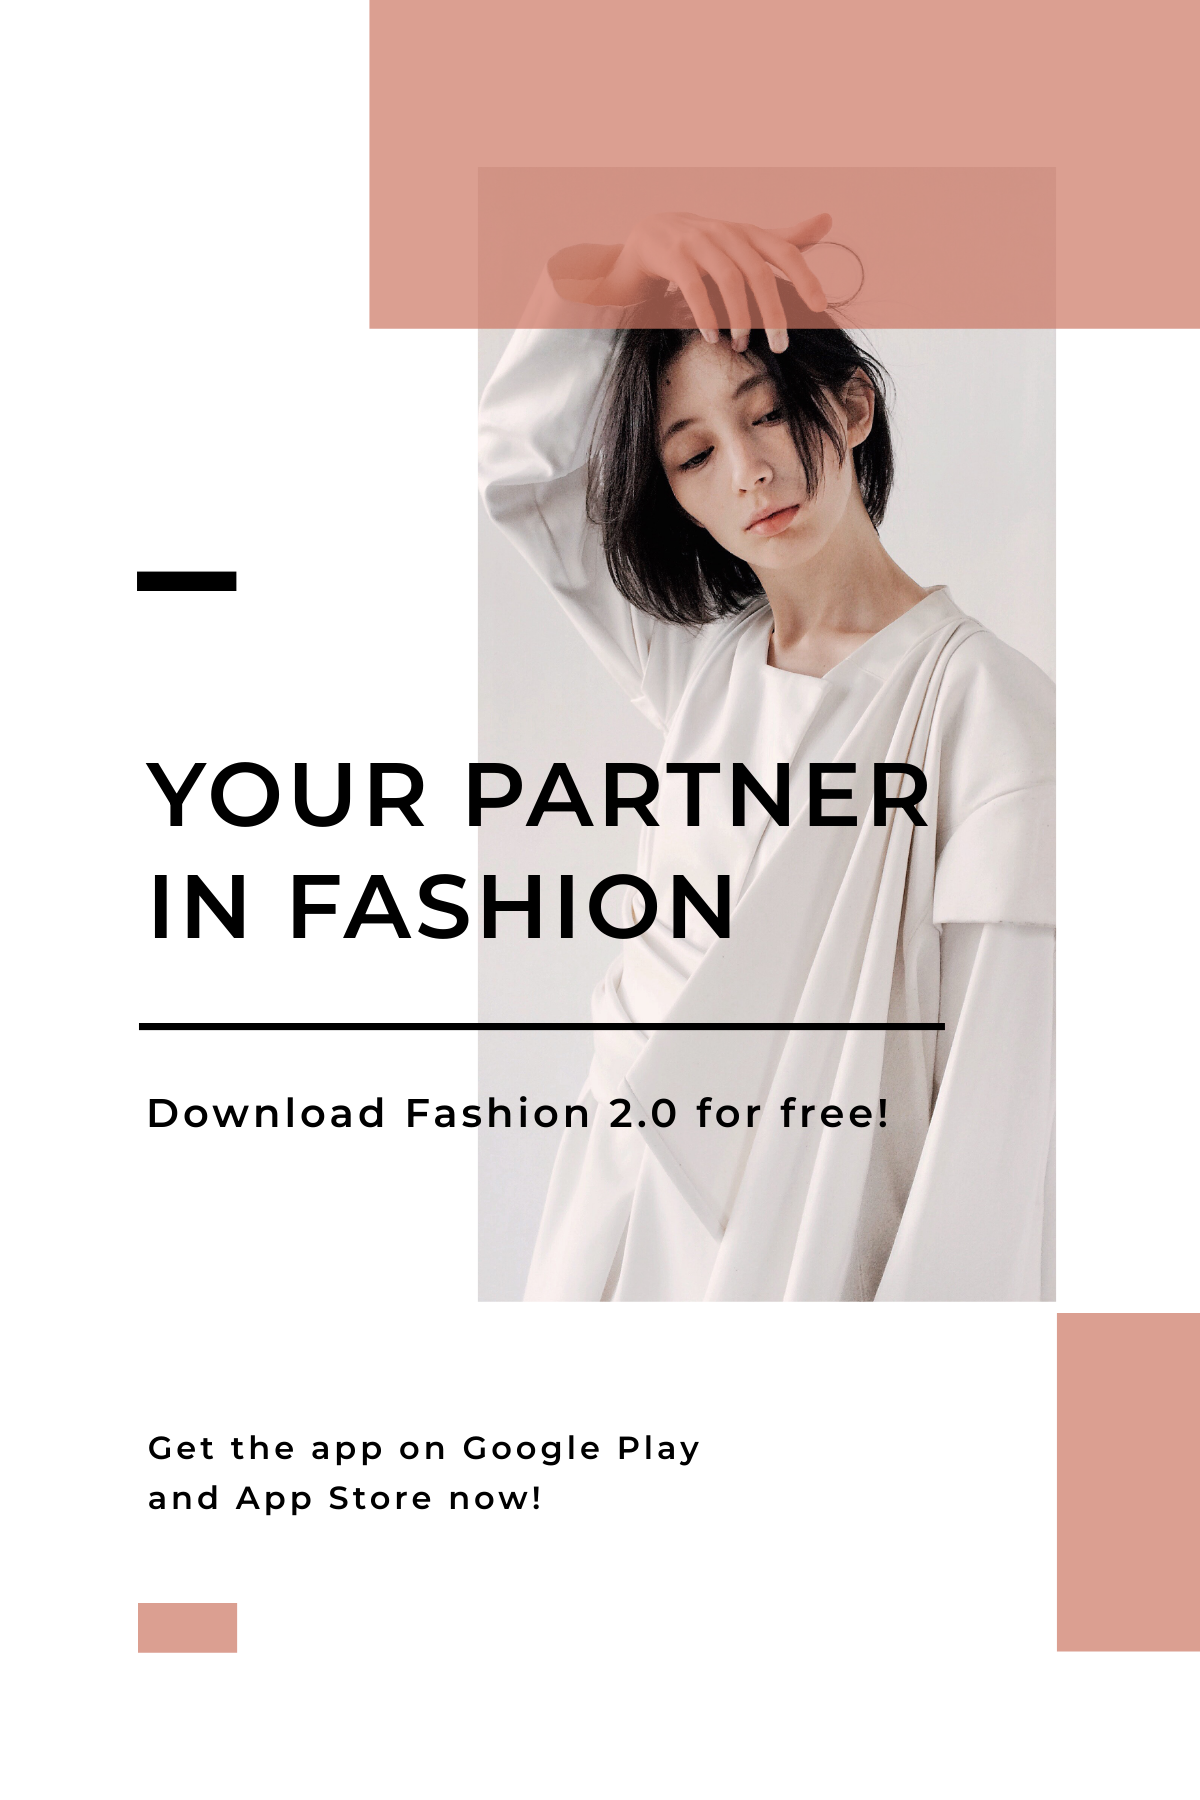 Minimalistic Fashion App Promotion Pinterest Pin